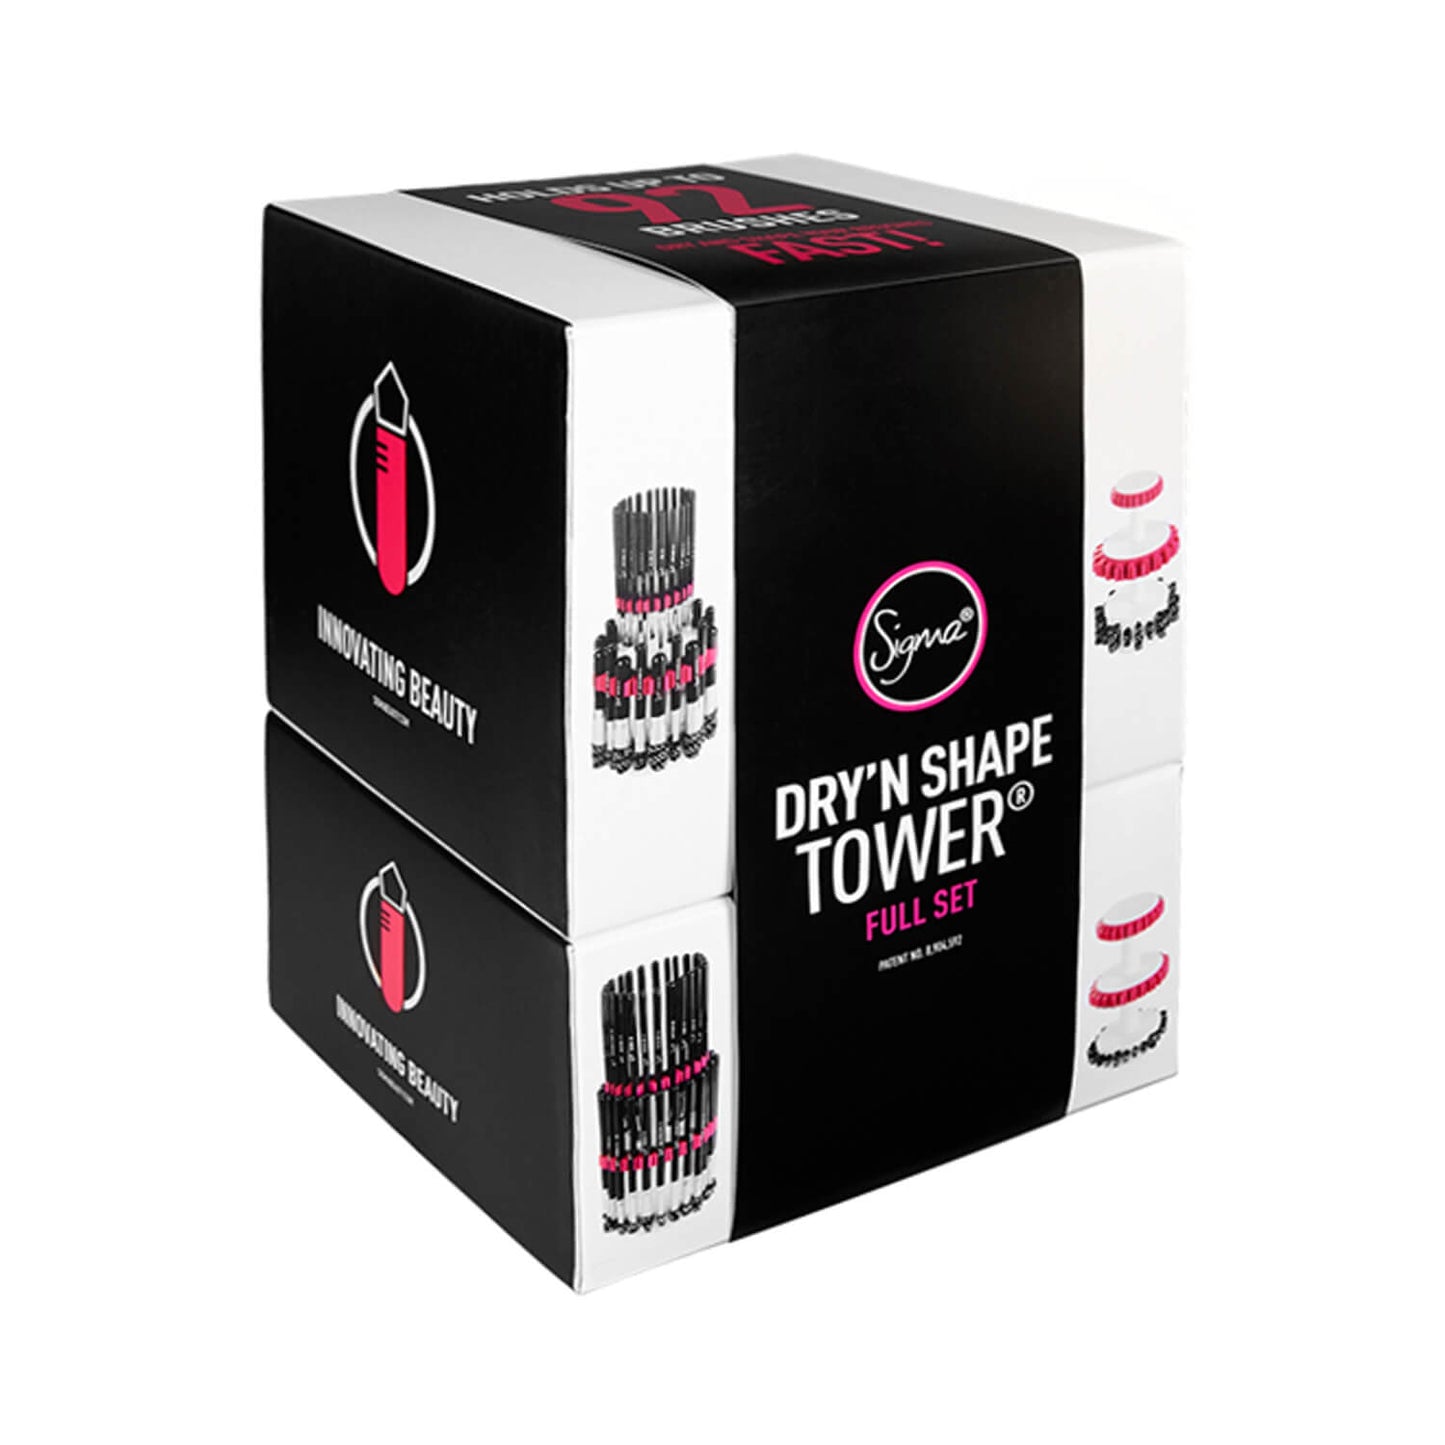 Sigma Beauty Dry'n Shape Tower Full Set